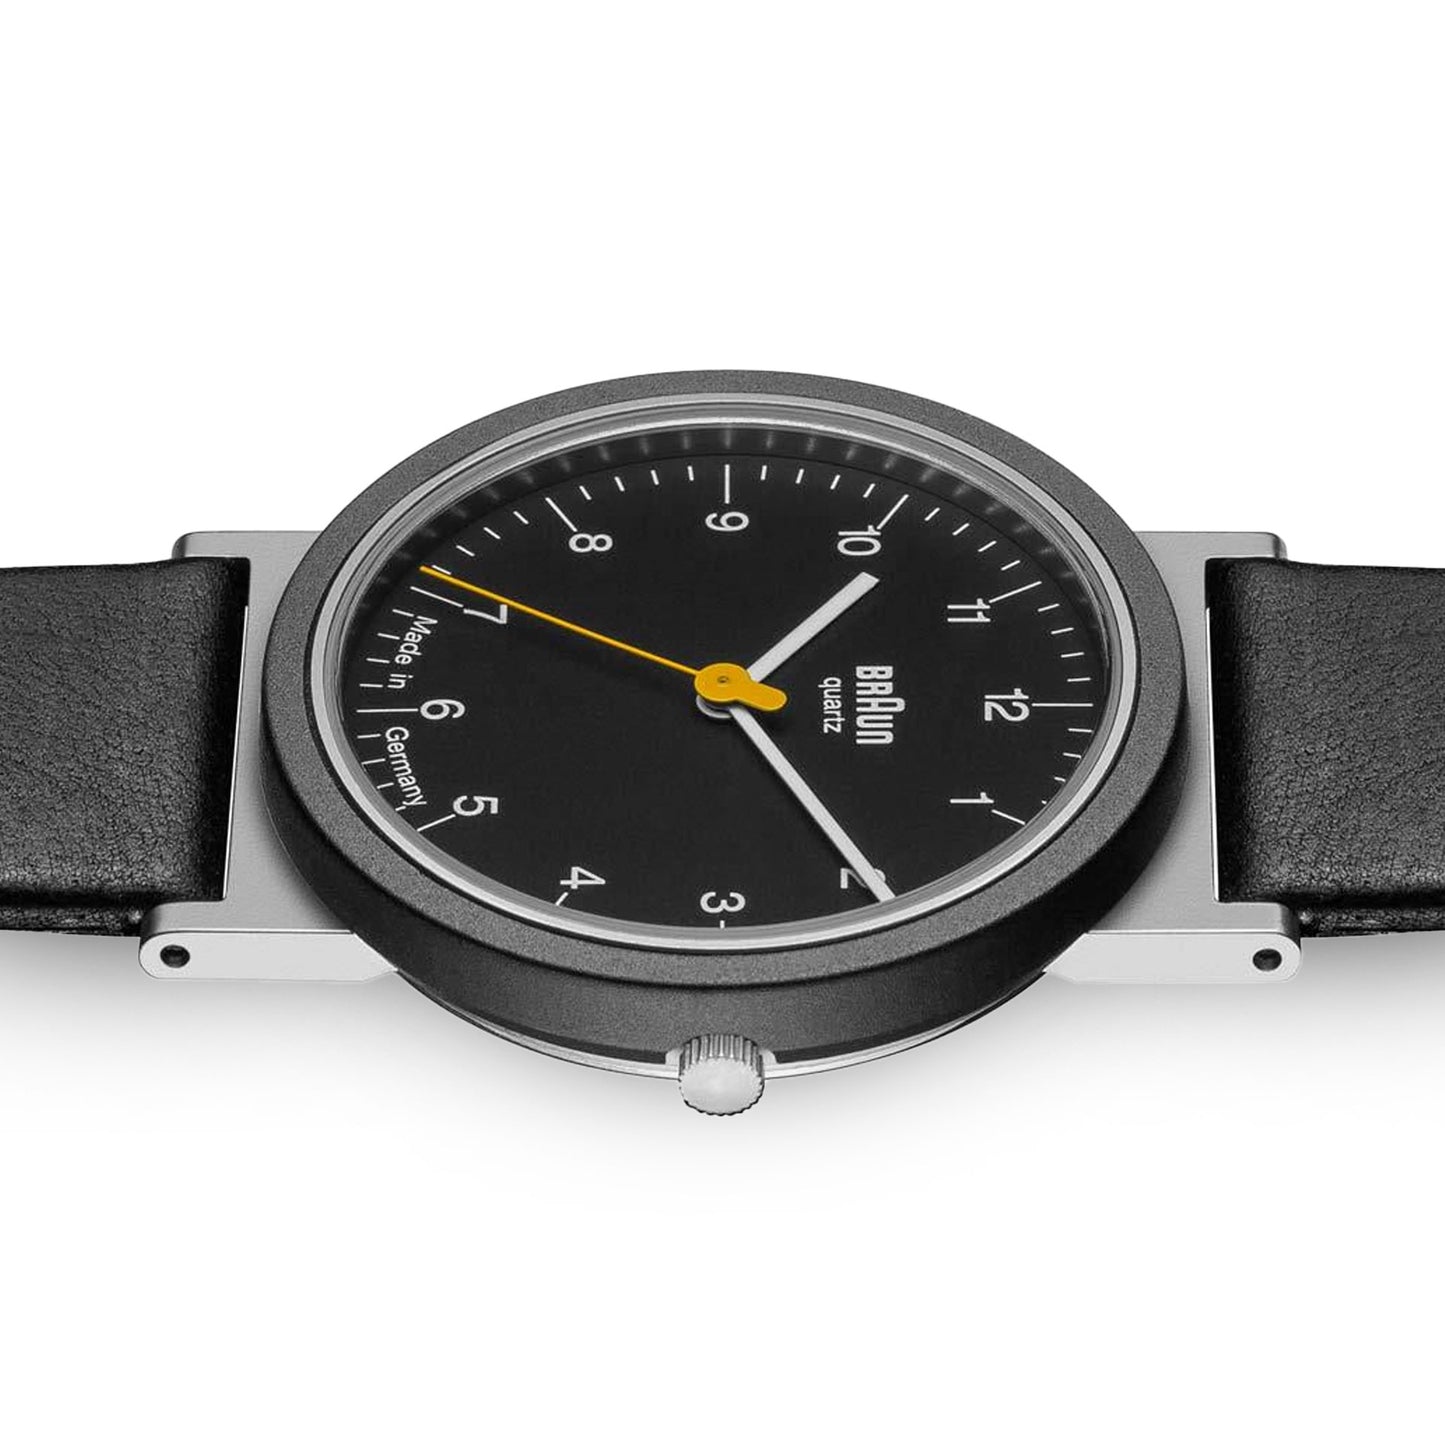 Braun AW10 Watch